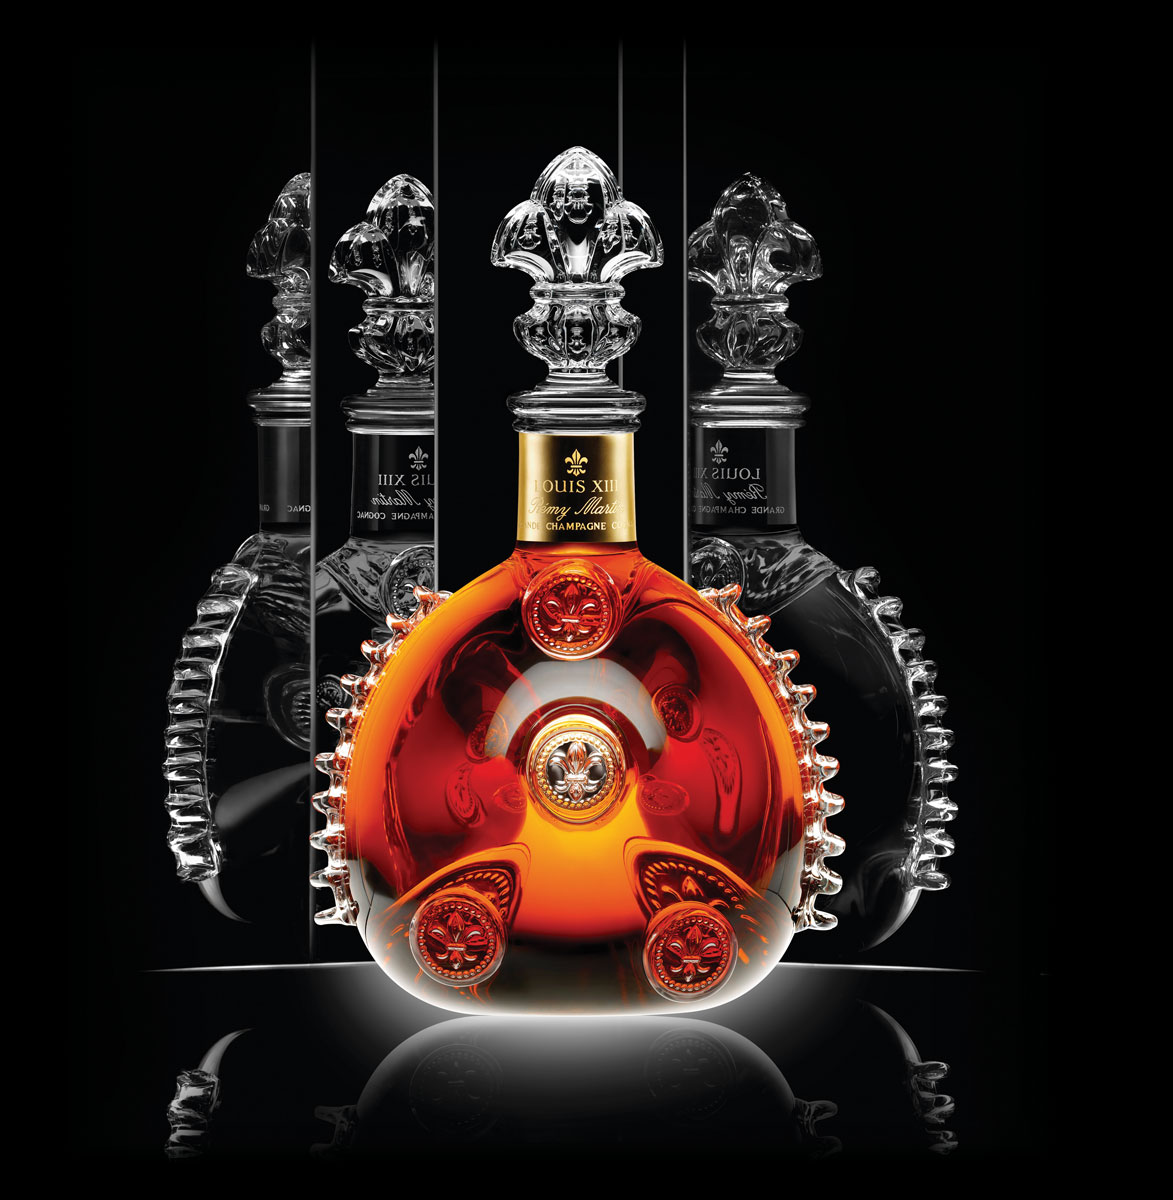 A bottle of Louis XIII Cognac, a French cognac